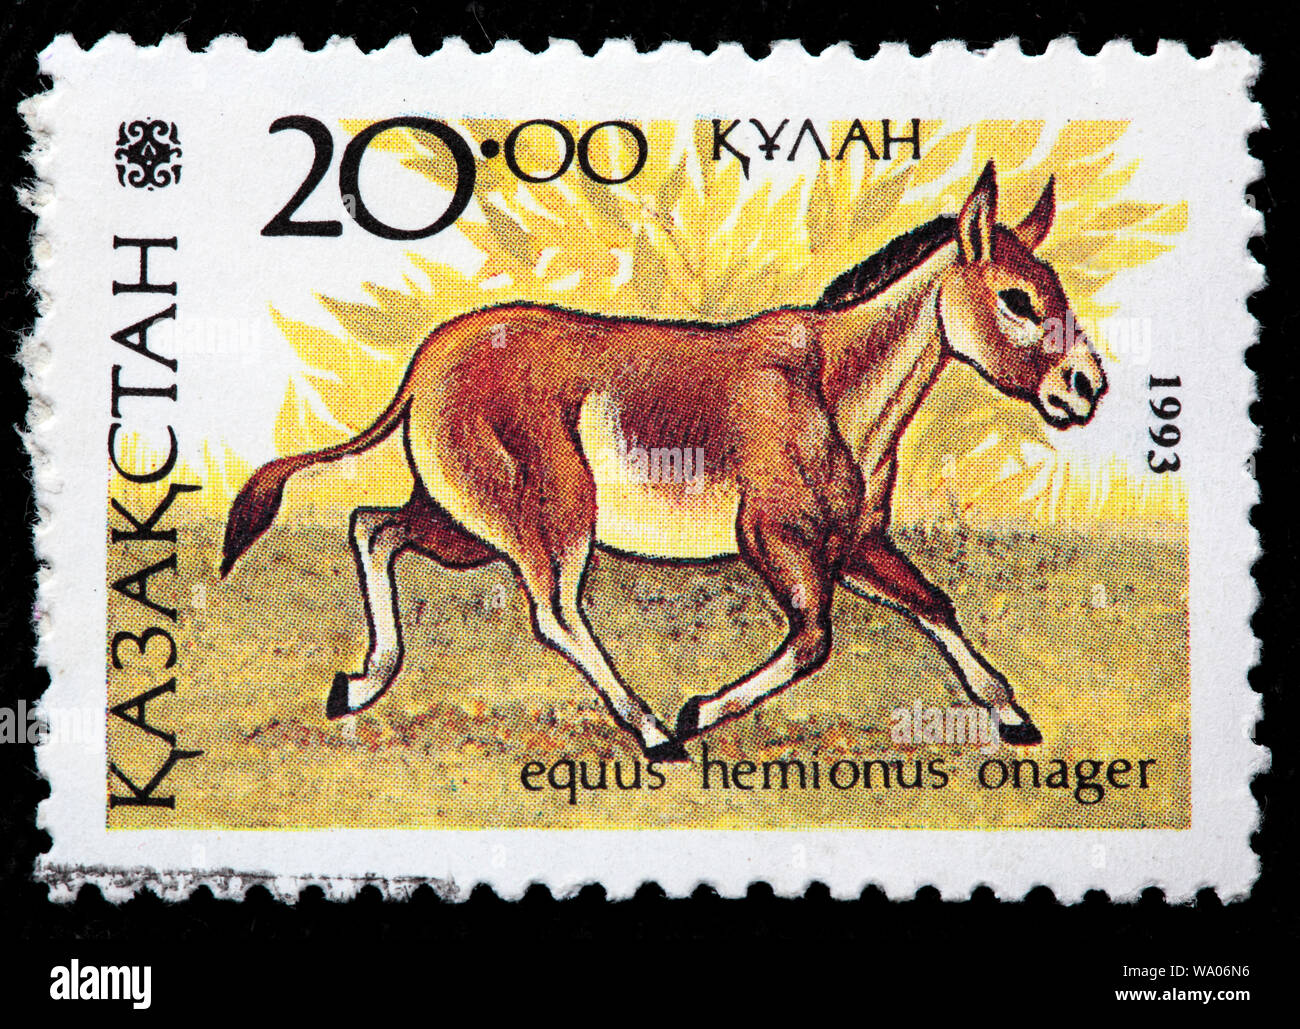 Persian onager, Equus hemionus onager, postage stamp, Kazakhstan, 1993 Stock Photo